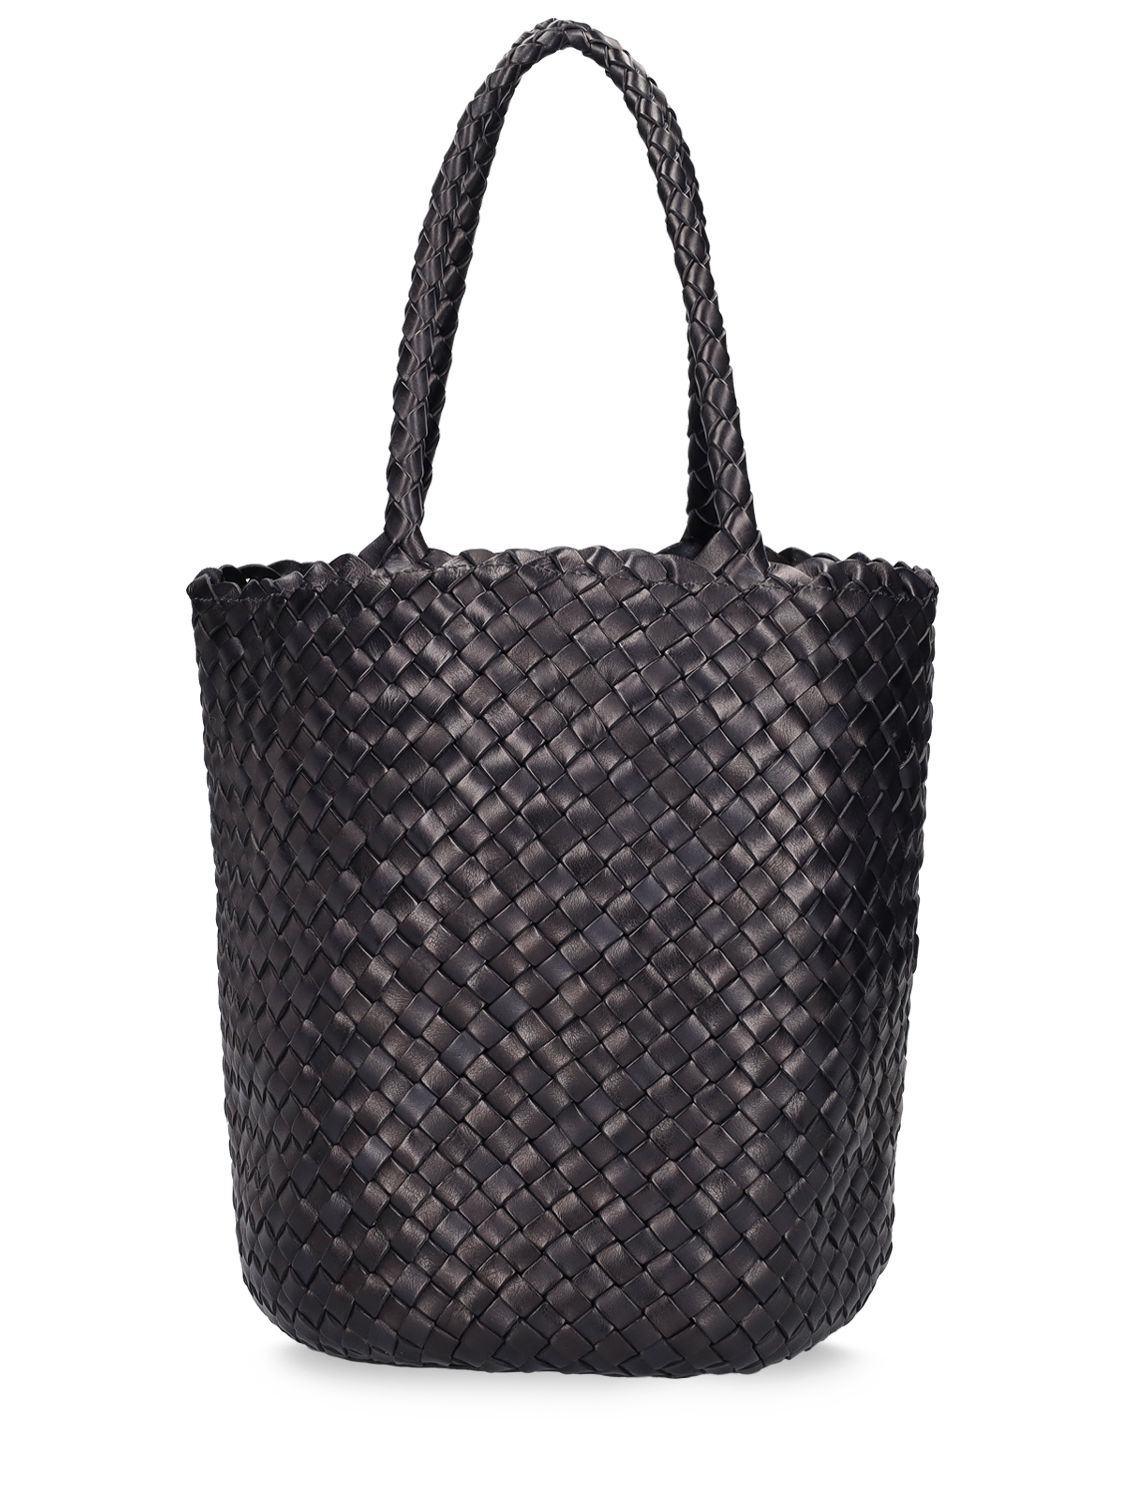 Hand Braided Leather Straps Basket Bag